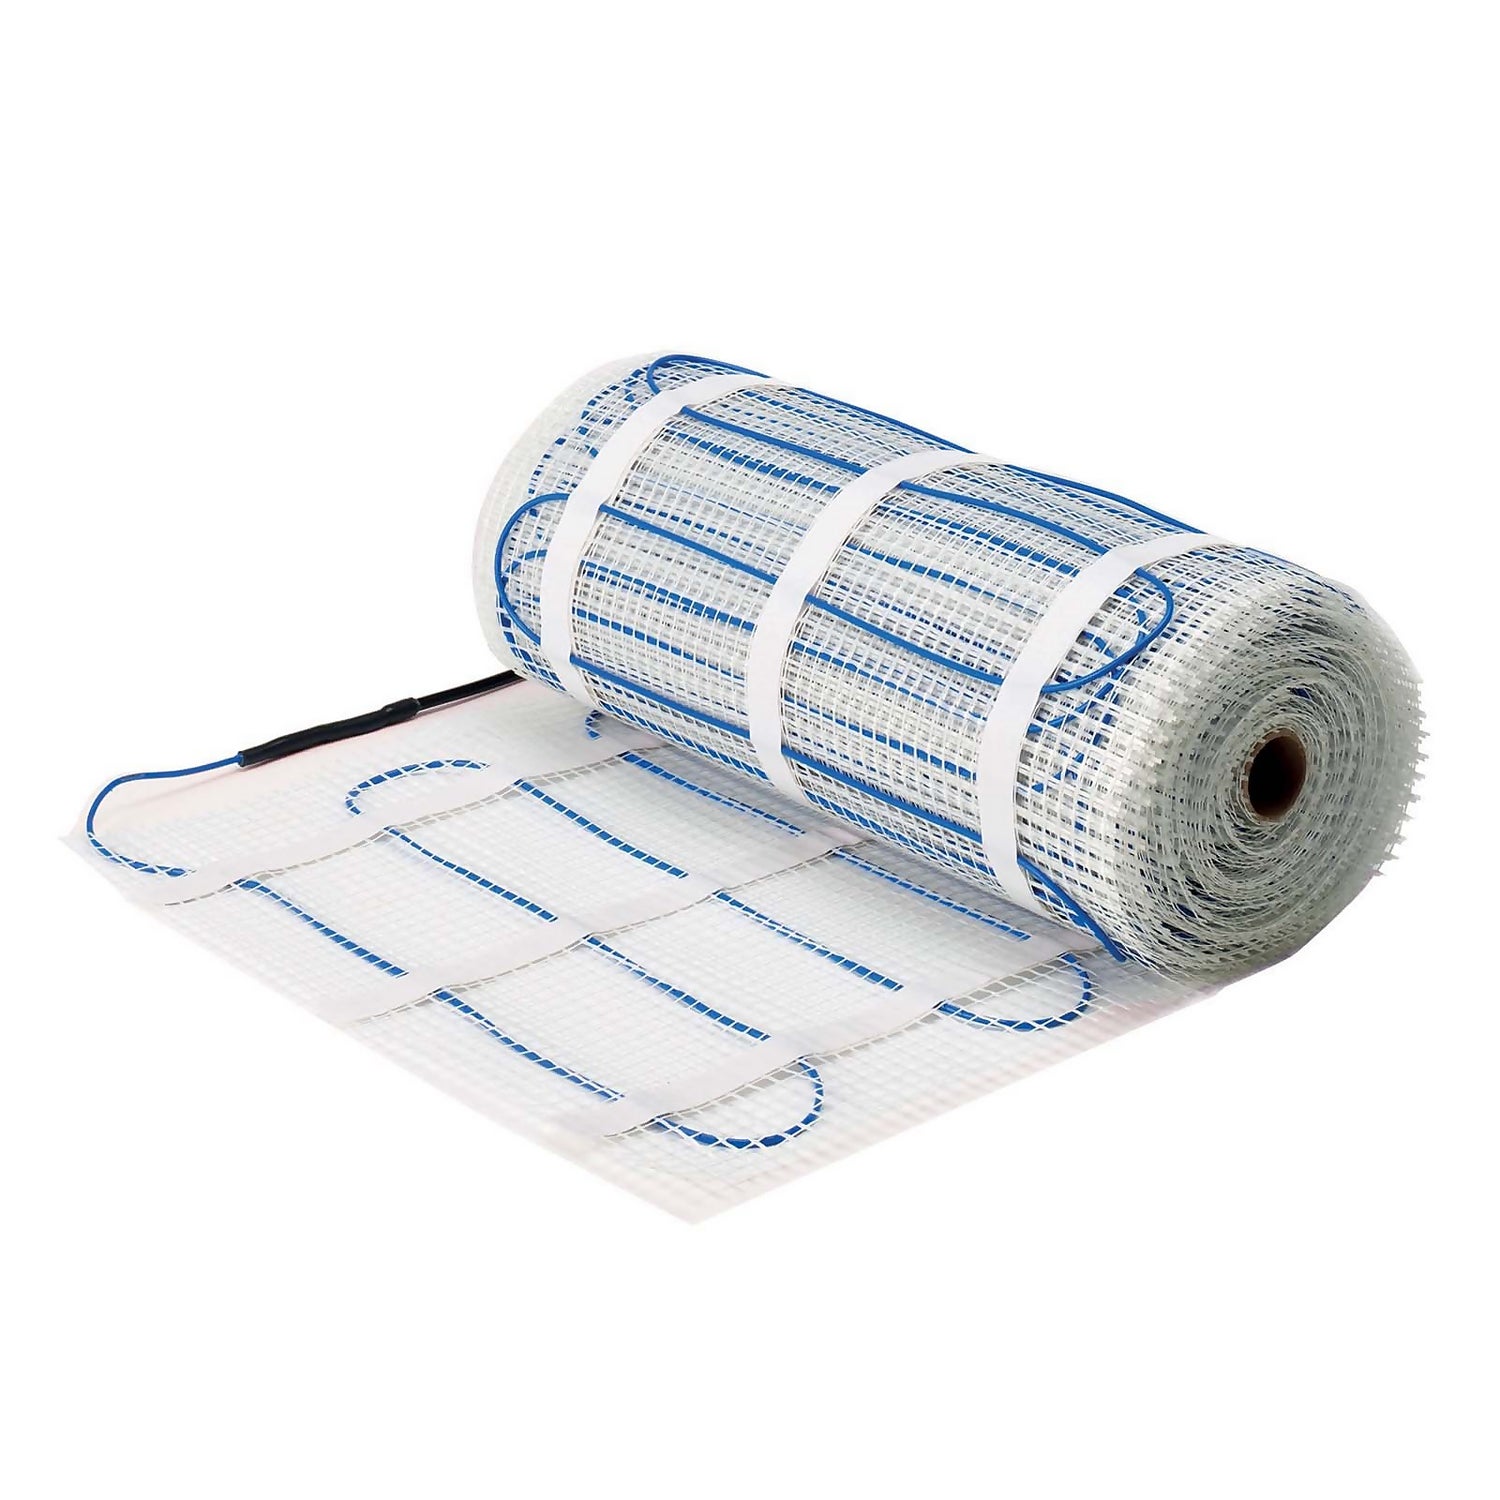 Heat Mat Underfloor Heating Kit with Insulation - 1m